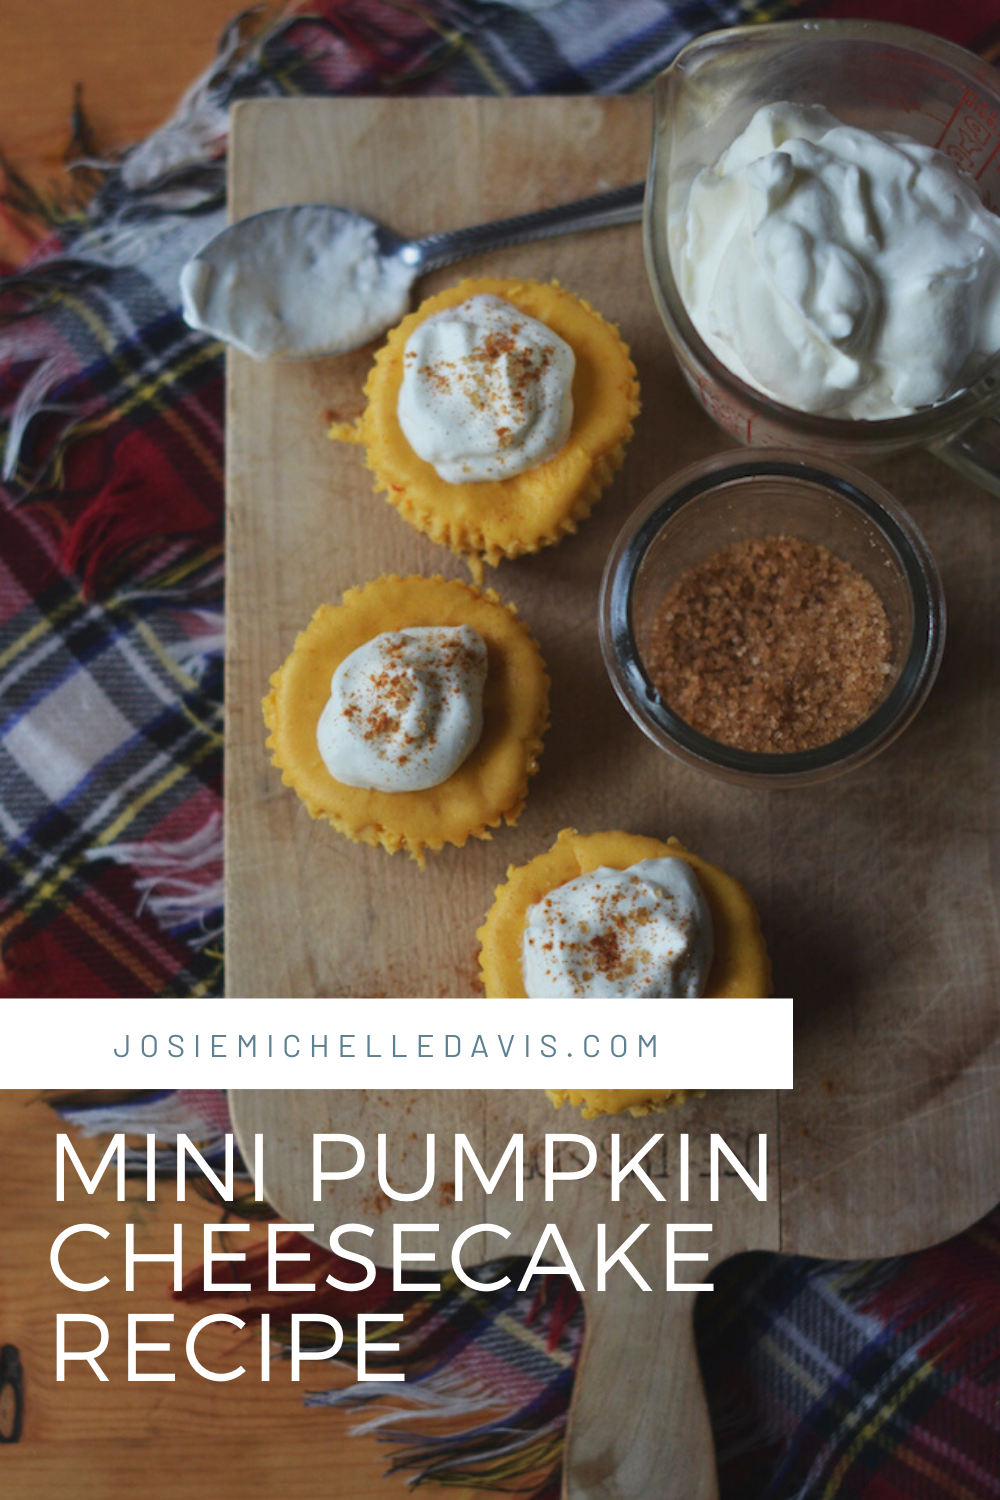 Mini Pumpkin Cheesecake Recipe for Fall